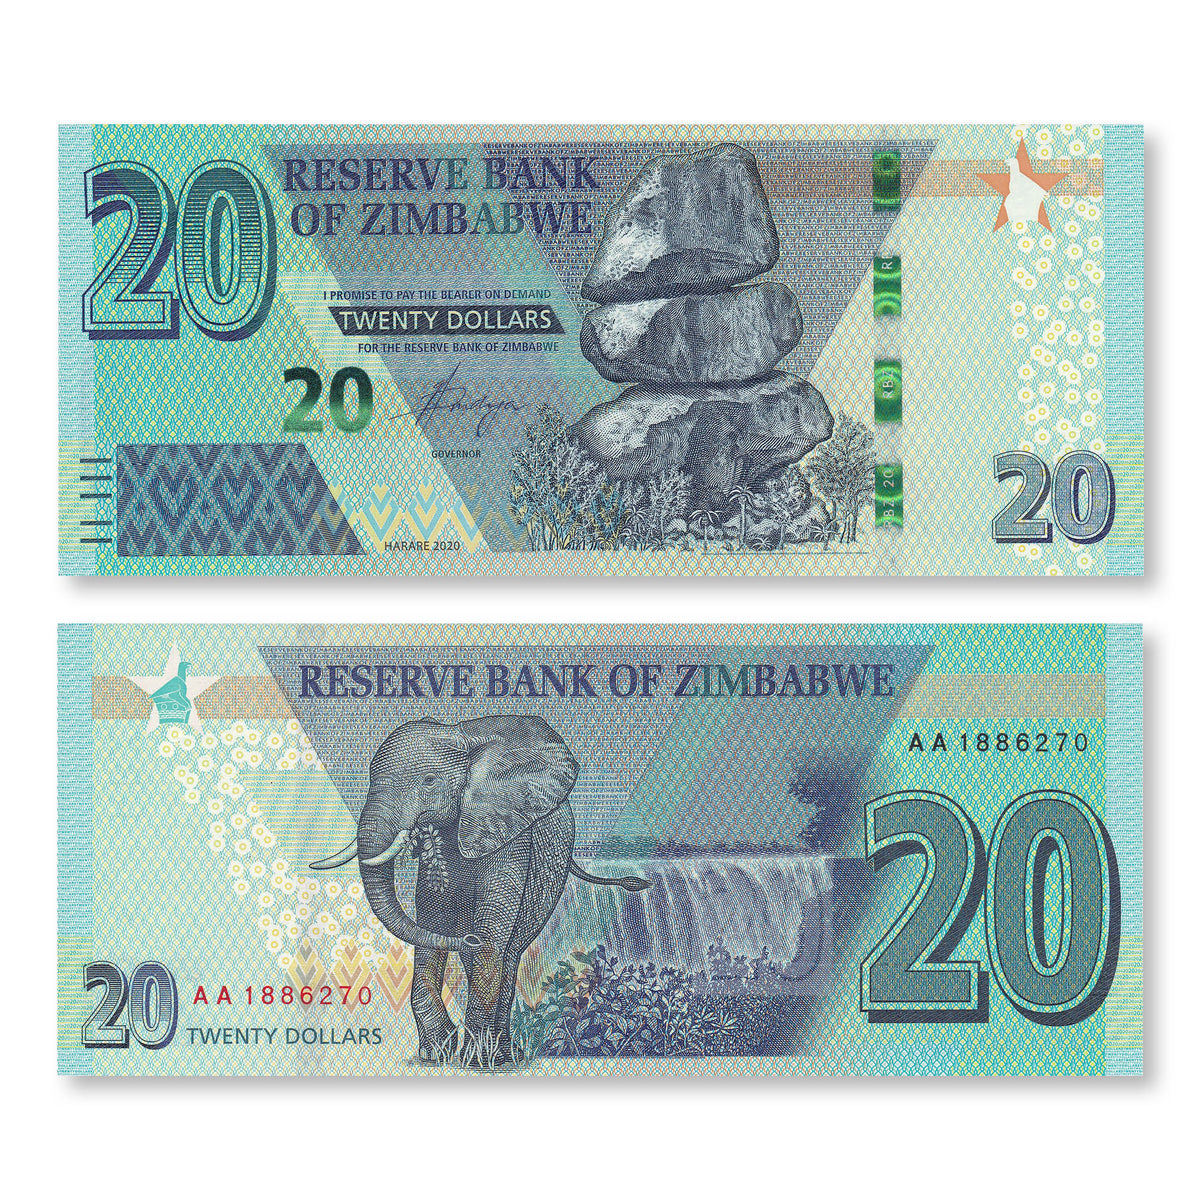 Zimbabwe 20 Dollars, 2020, B195a, UNC - Robert's World Money - World Banknotes